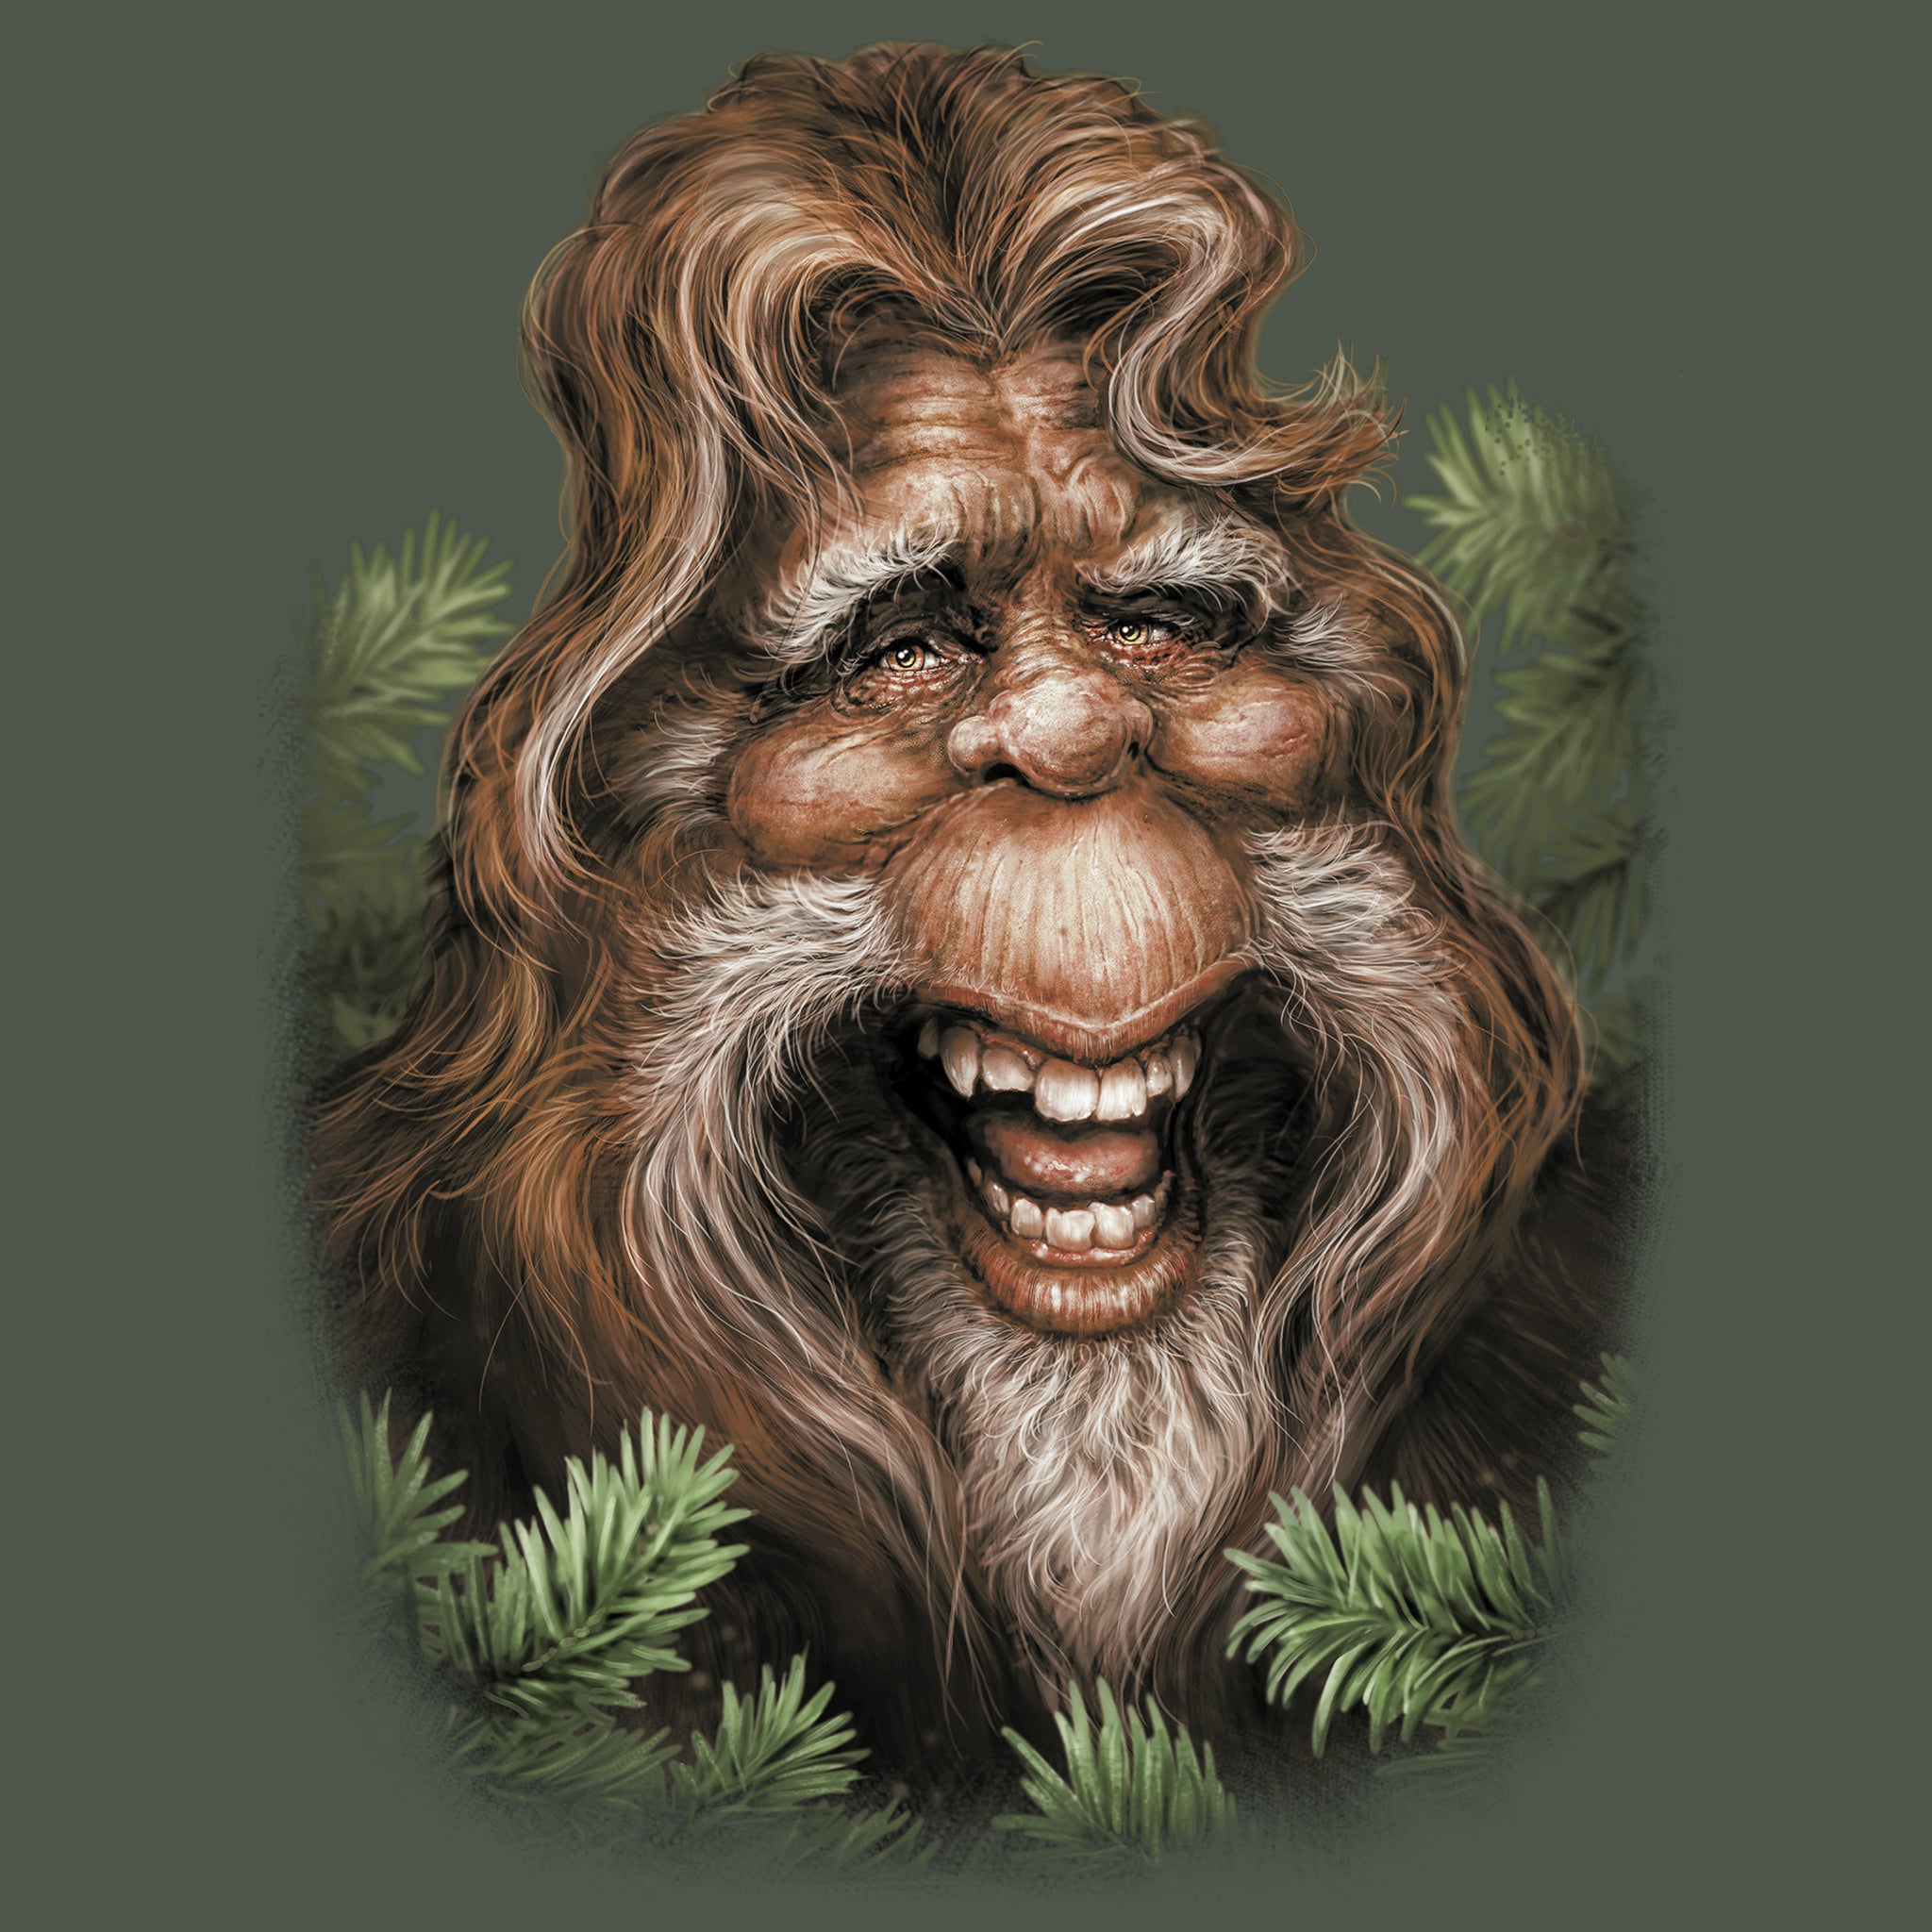 Bigfoot Bob- Painting of friendly Sasquatch character by Canadian artist Patrick LaMontagne